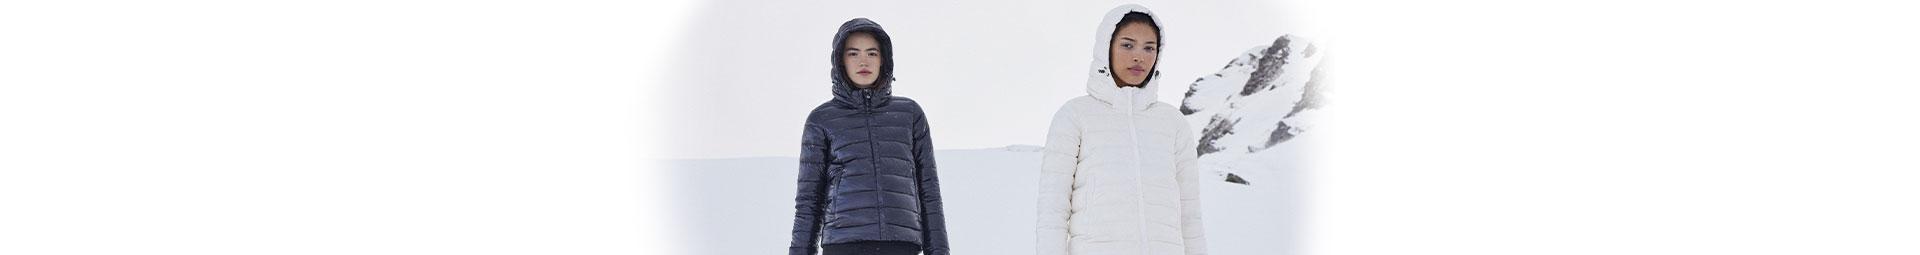 Parka jackets, warm winter coats for men, women & kids | Pyrenex